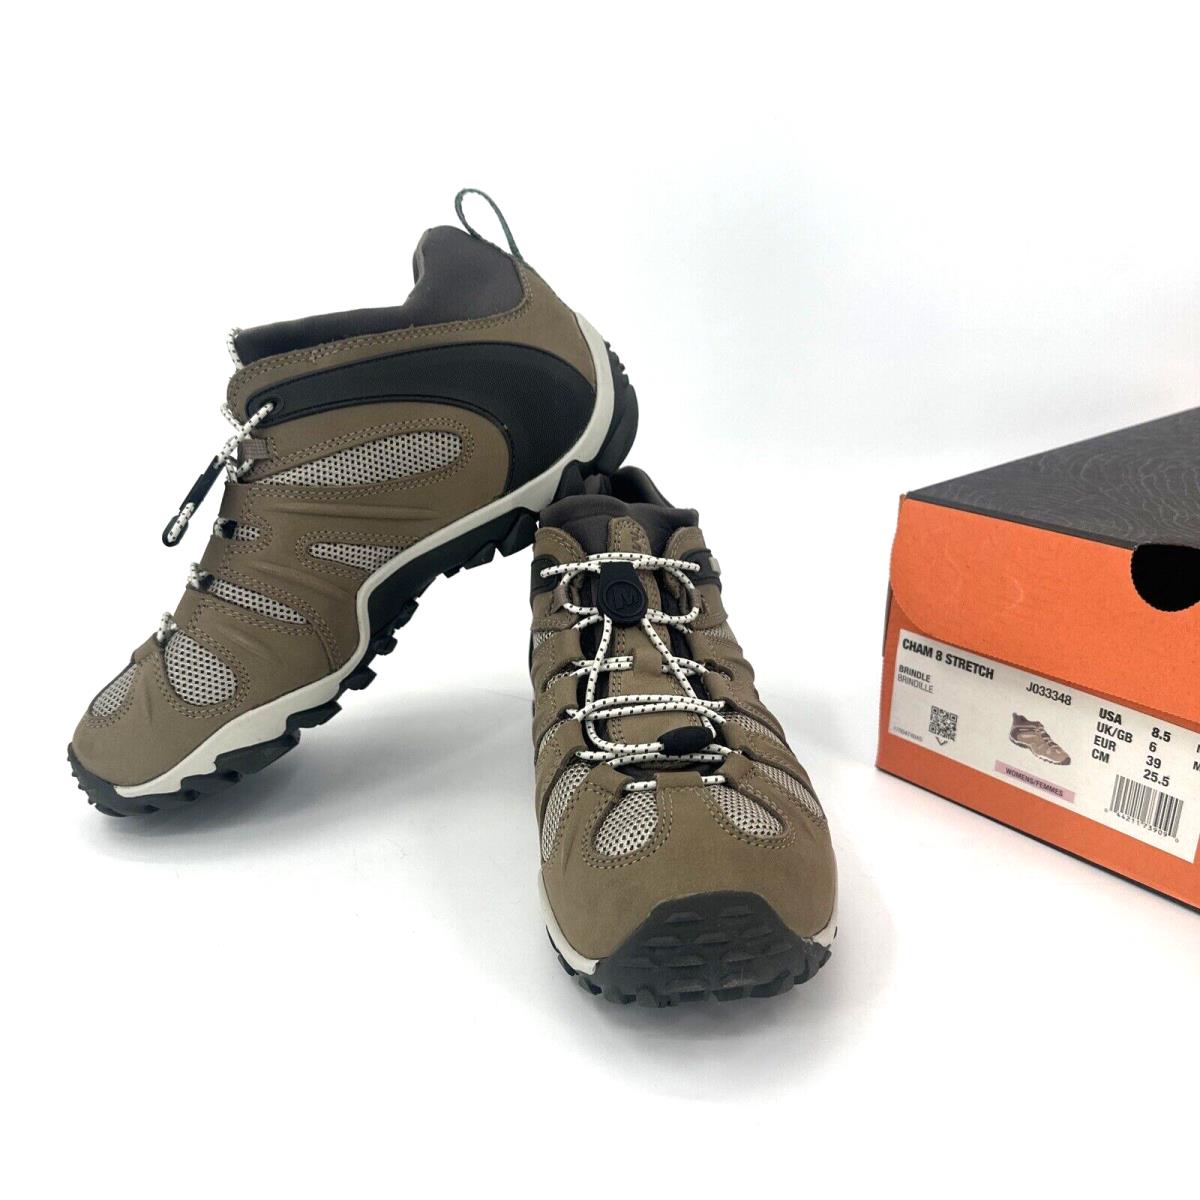 Merrell Womens Size 8.5 Hiking Shoes Chameleon Cham 8 Stretch Vibram Brindle